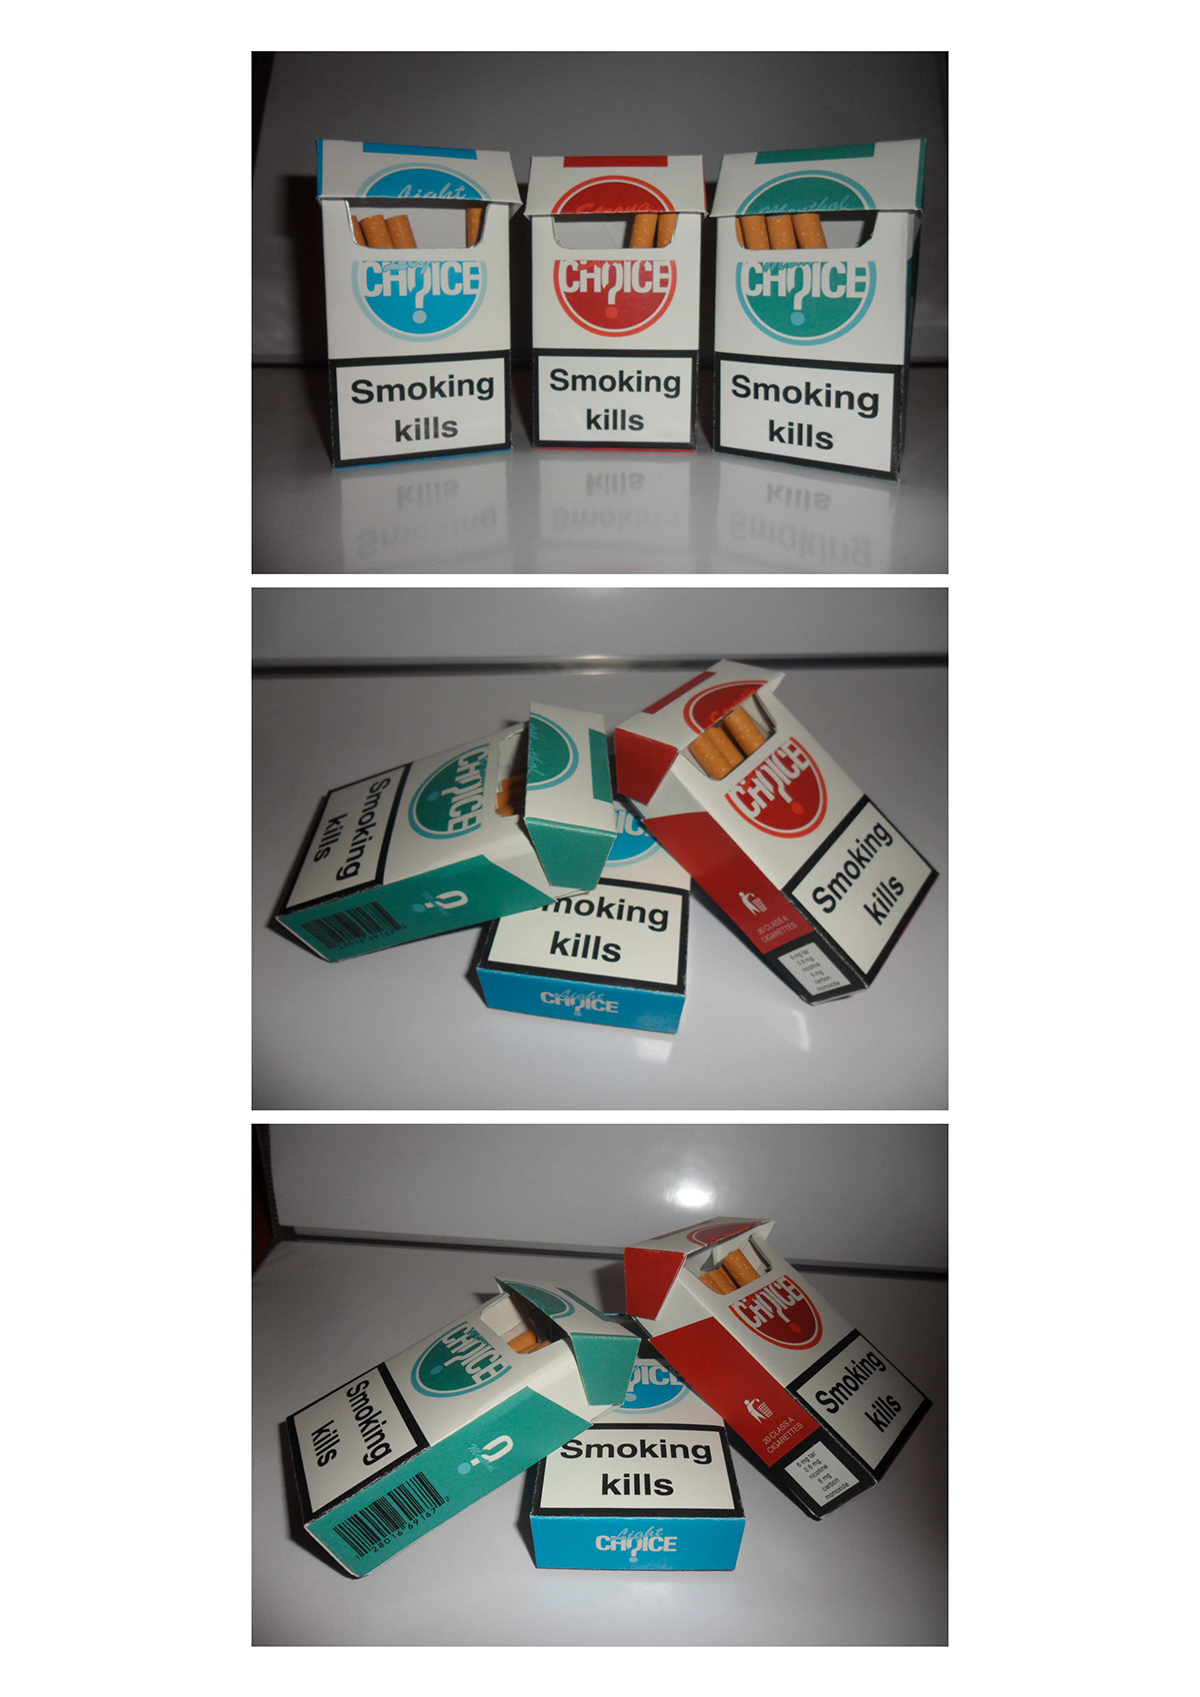 cigerettes Choice Raw Deal positve Retro Smokers smoking question question mark pro smoking